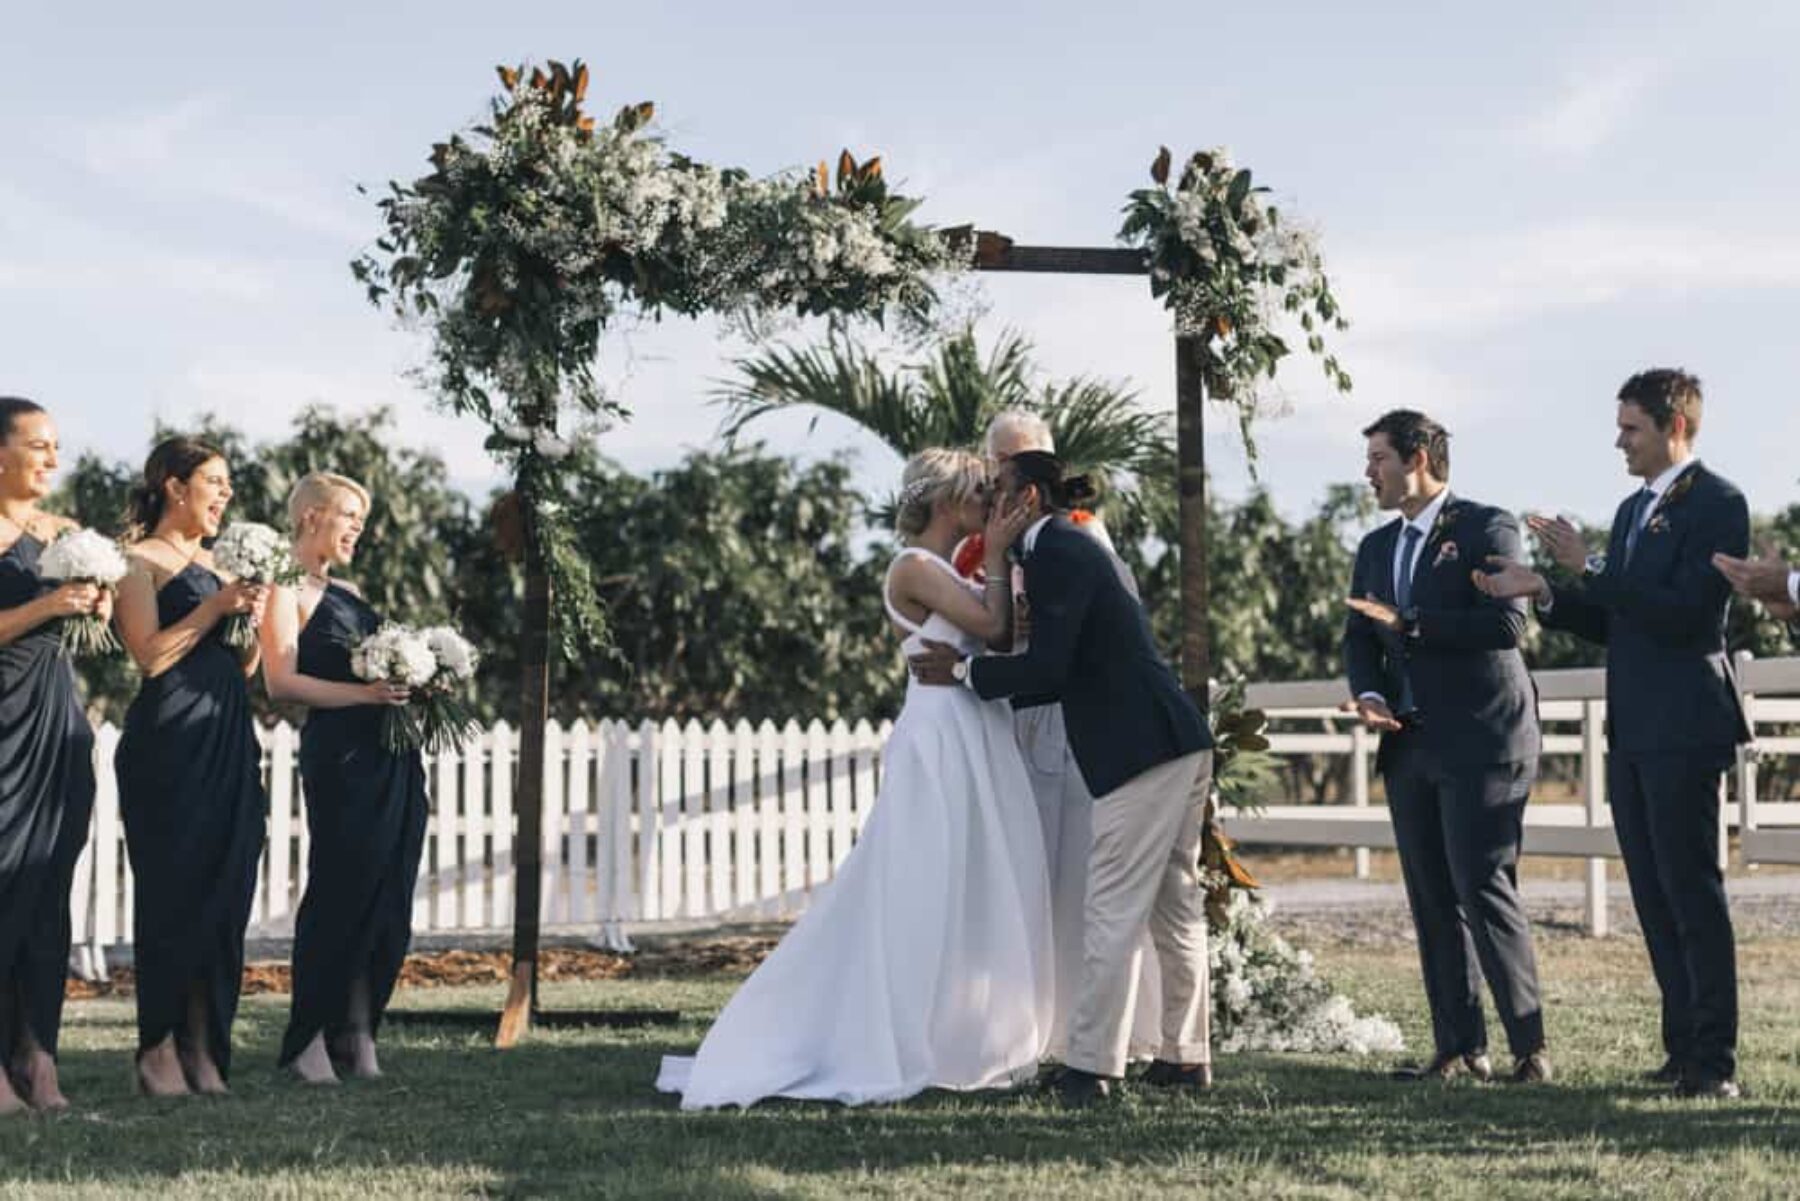 Magical farm wedding, Townsville QLD / Photography by Aleksandar Jason